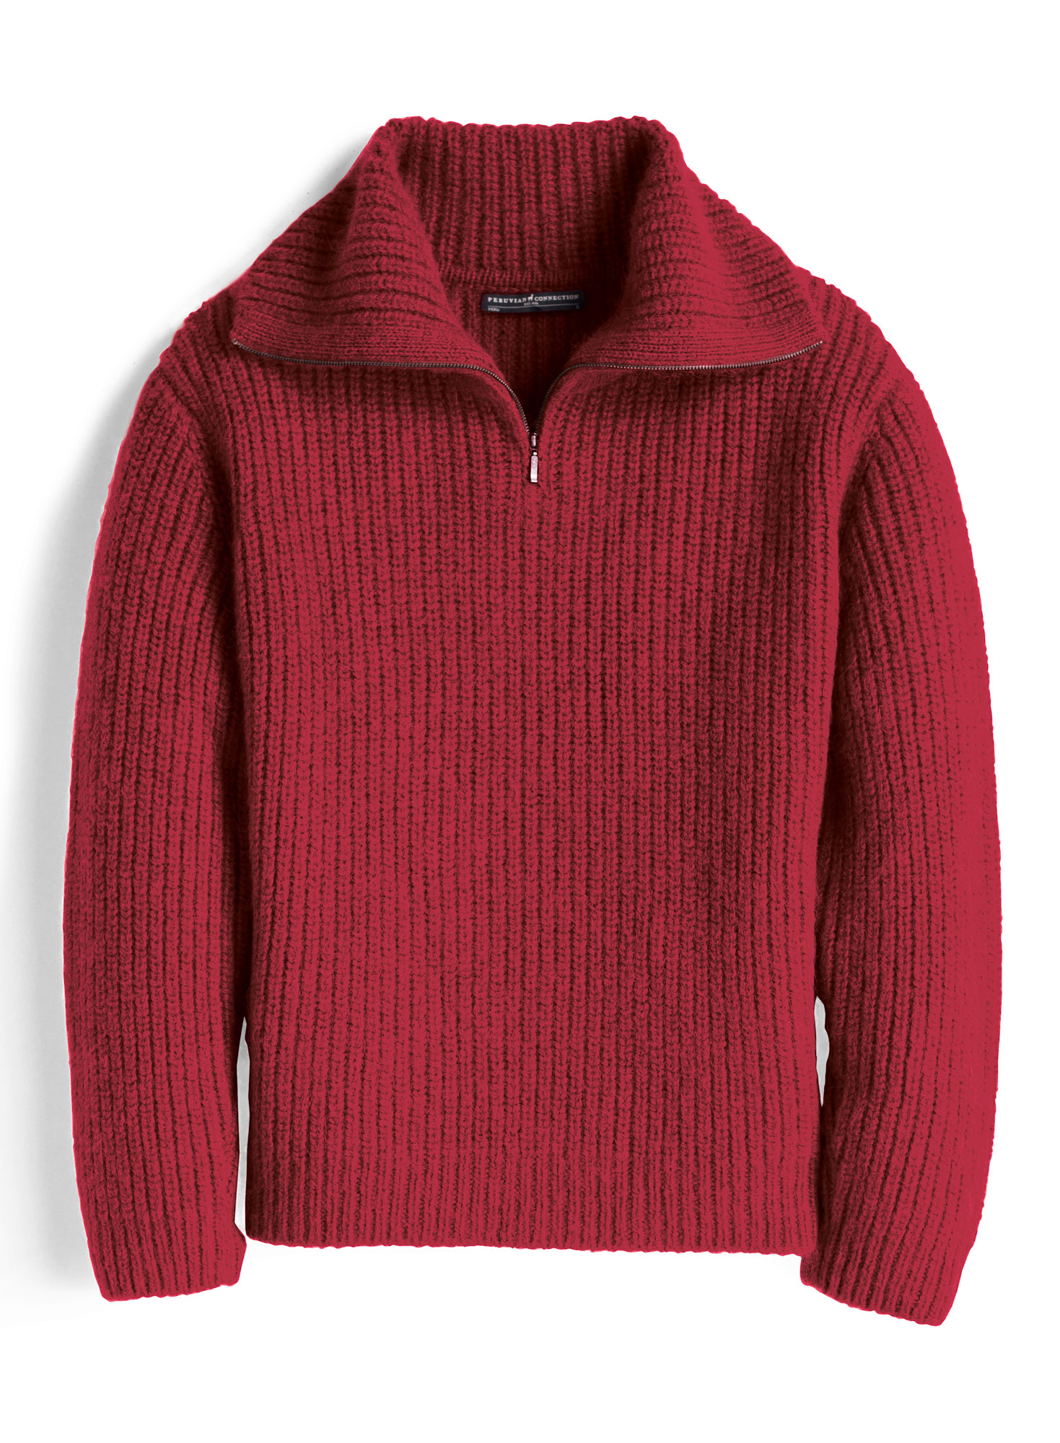 Promesa Cozy Up Chunky Knit Oversize Turtleneck Sweater Ruby Red / L